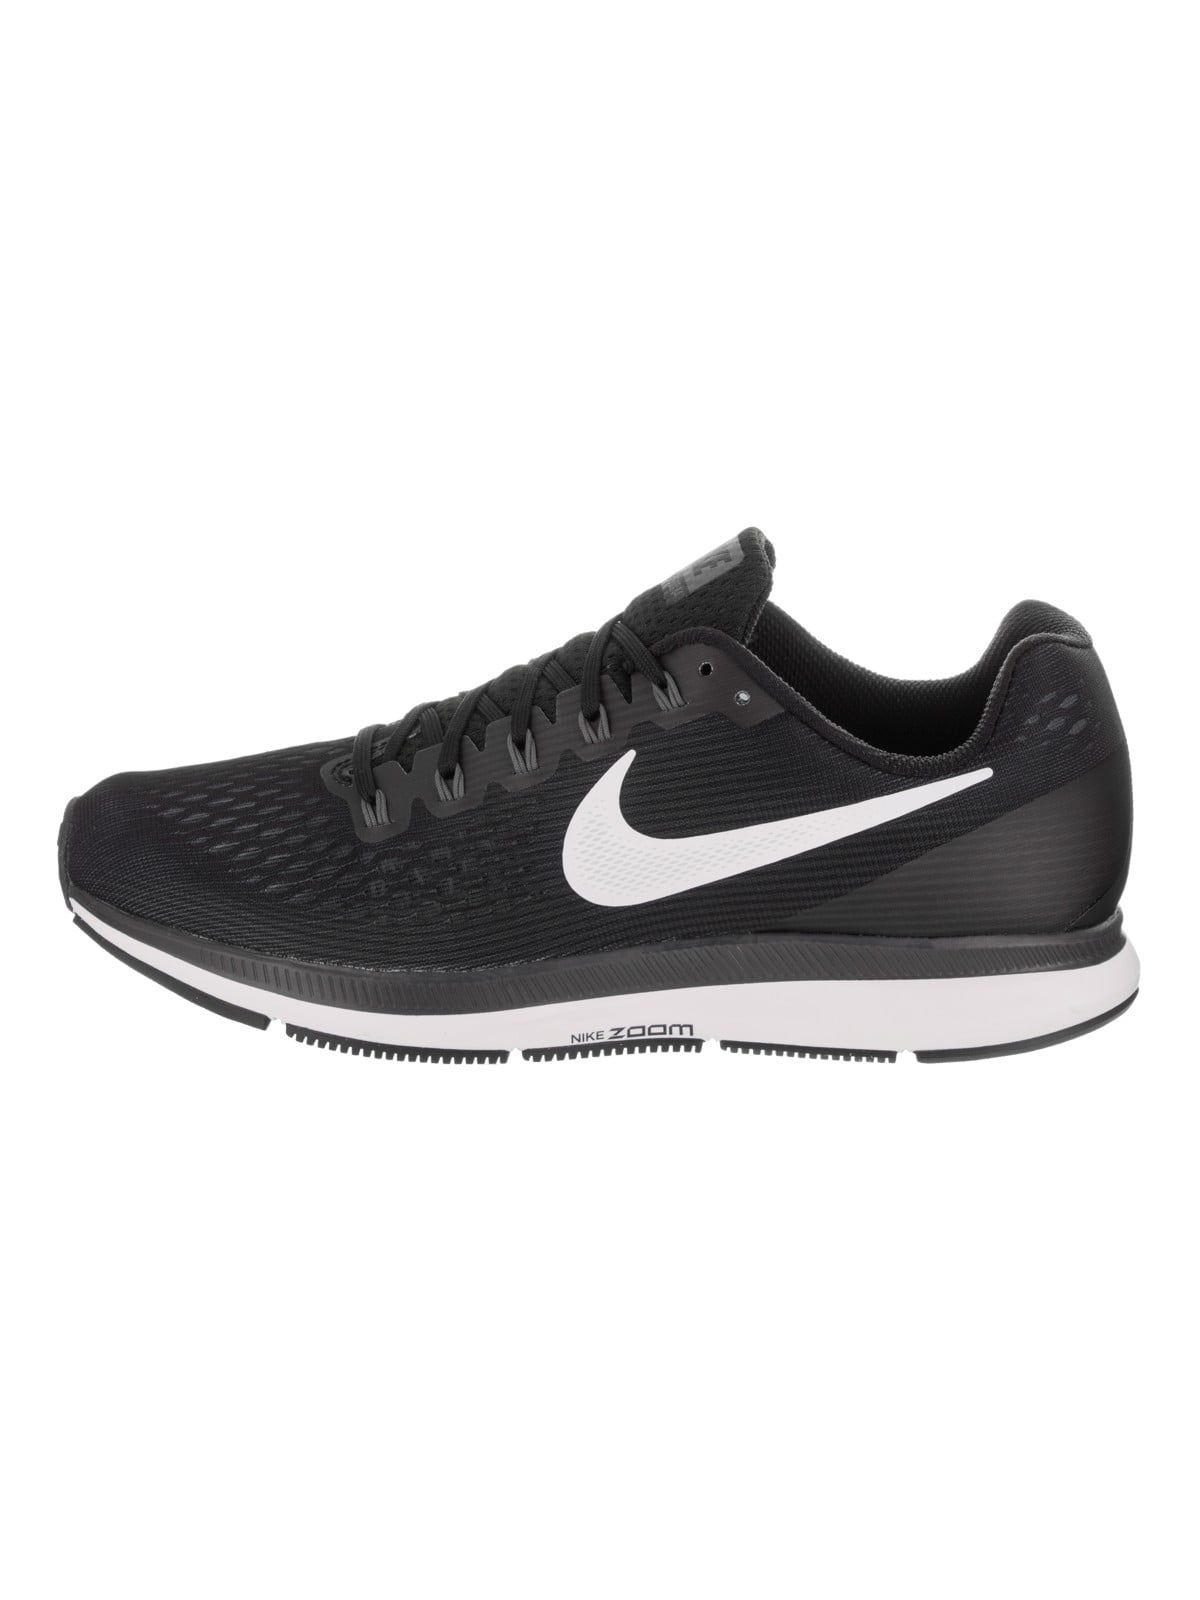 Nike Air Zoom Pegasus 34 Black / White-Dark Grey Ankle-High Running Shoe 9.5M Walmart.com